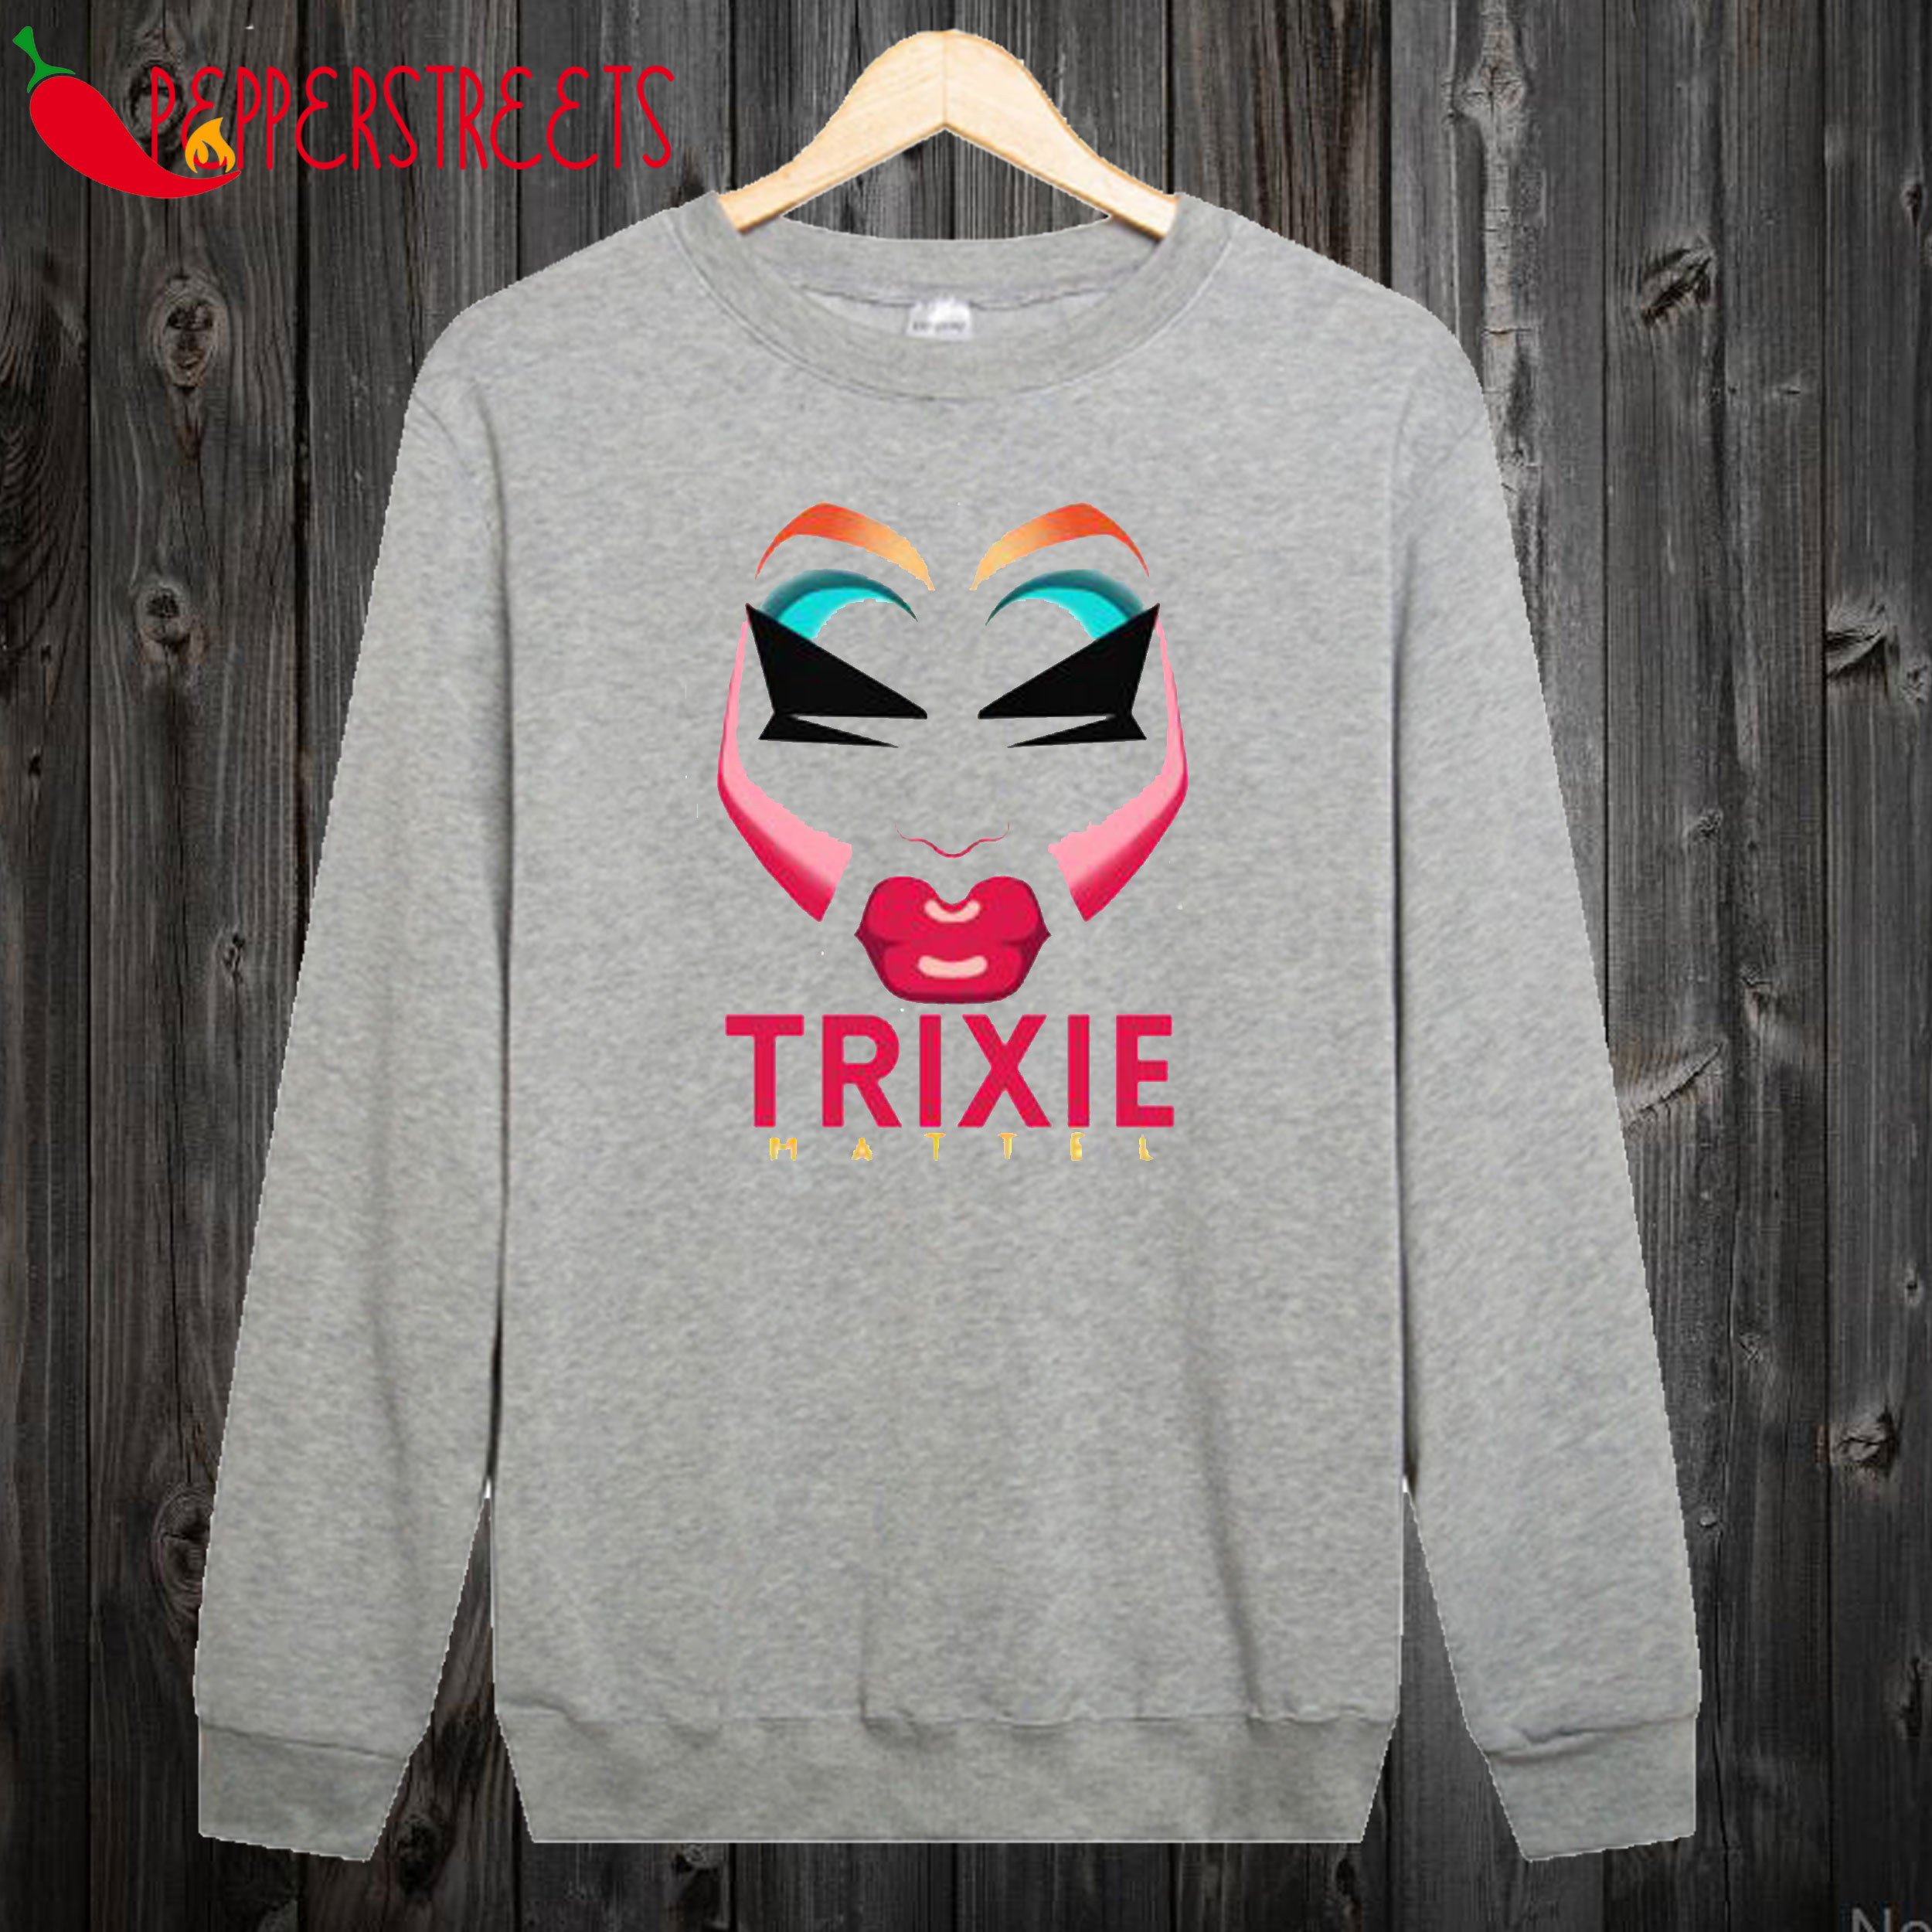 Trixie Mattel FACE Sweatshirt